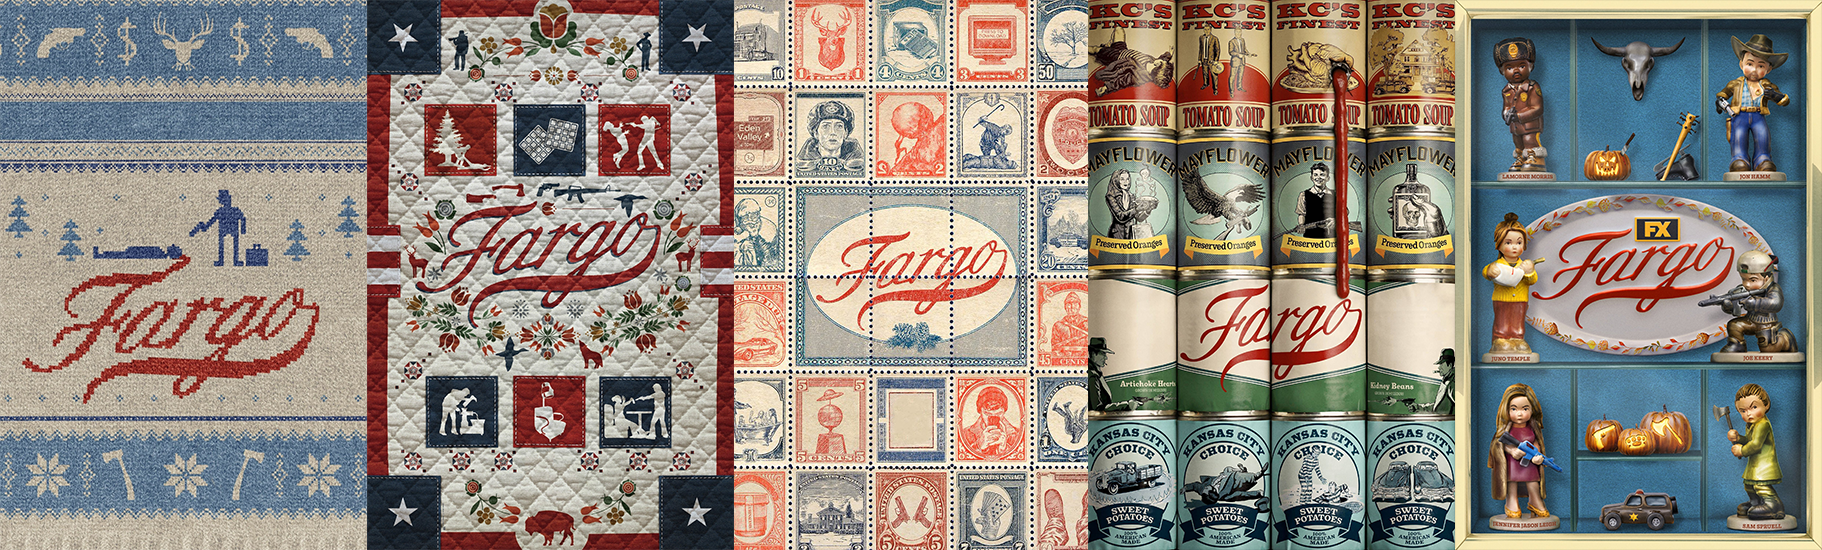 Fargo: A retrospective of five stories